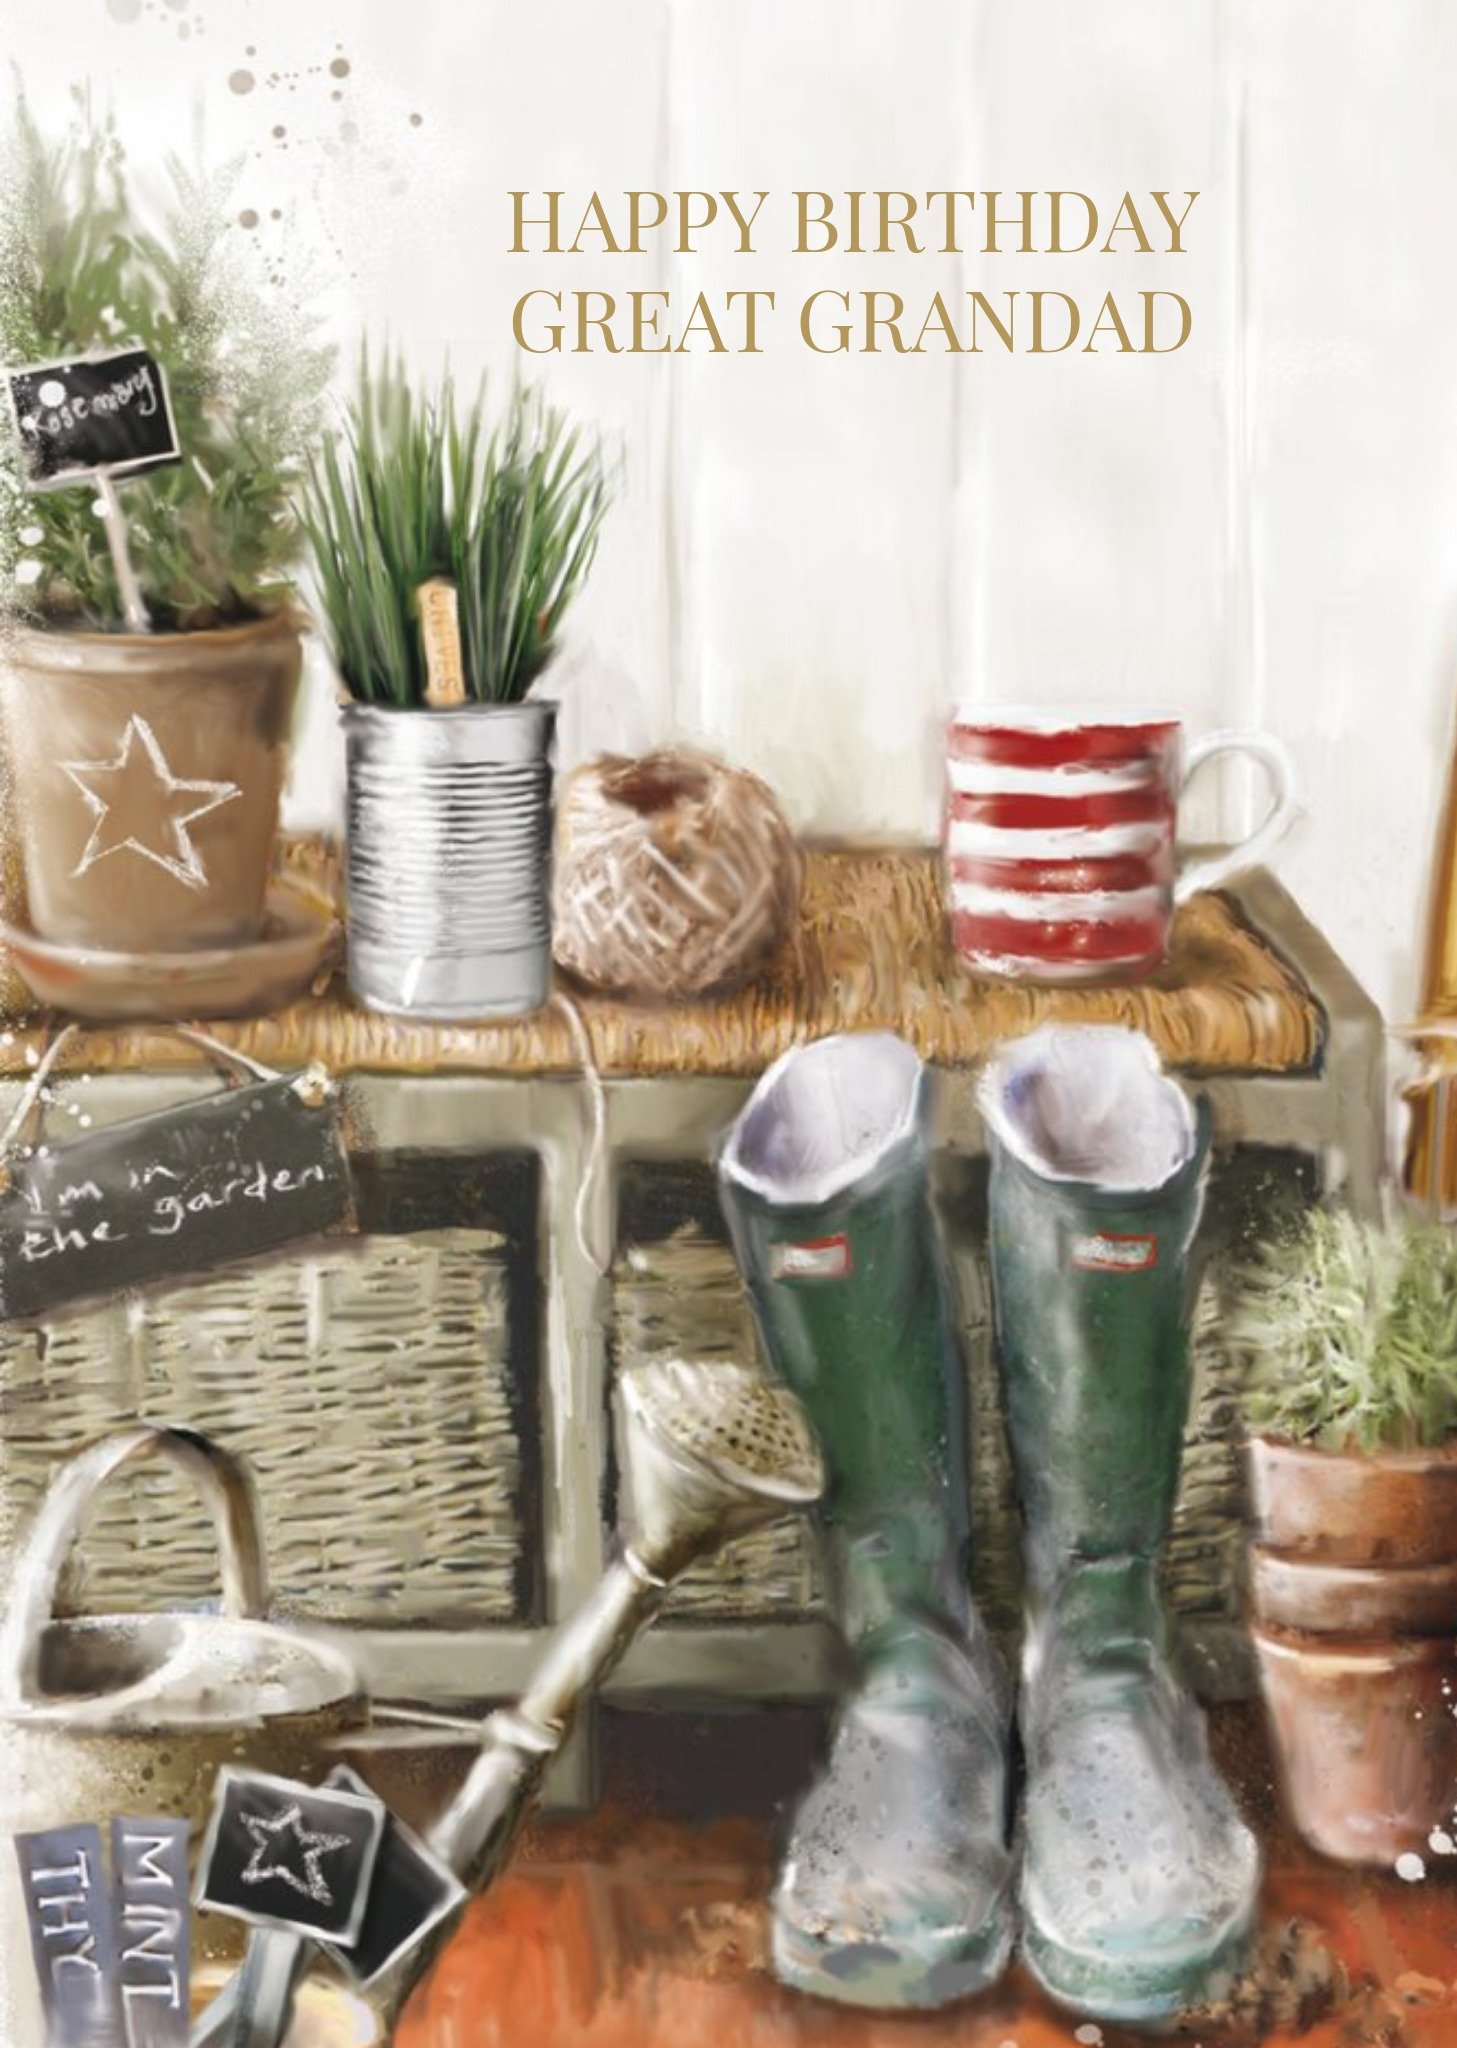 Ling Design Garden Hut Personalised Great Grandad Birthday Card, Large